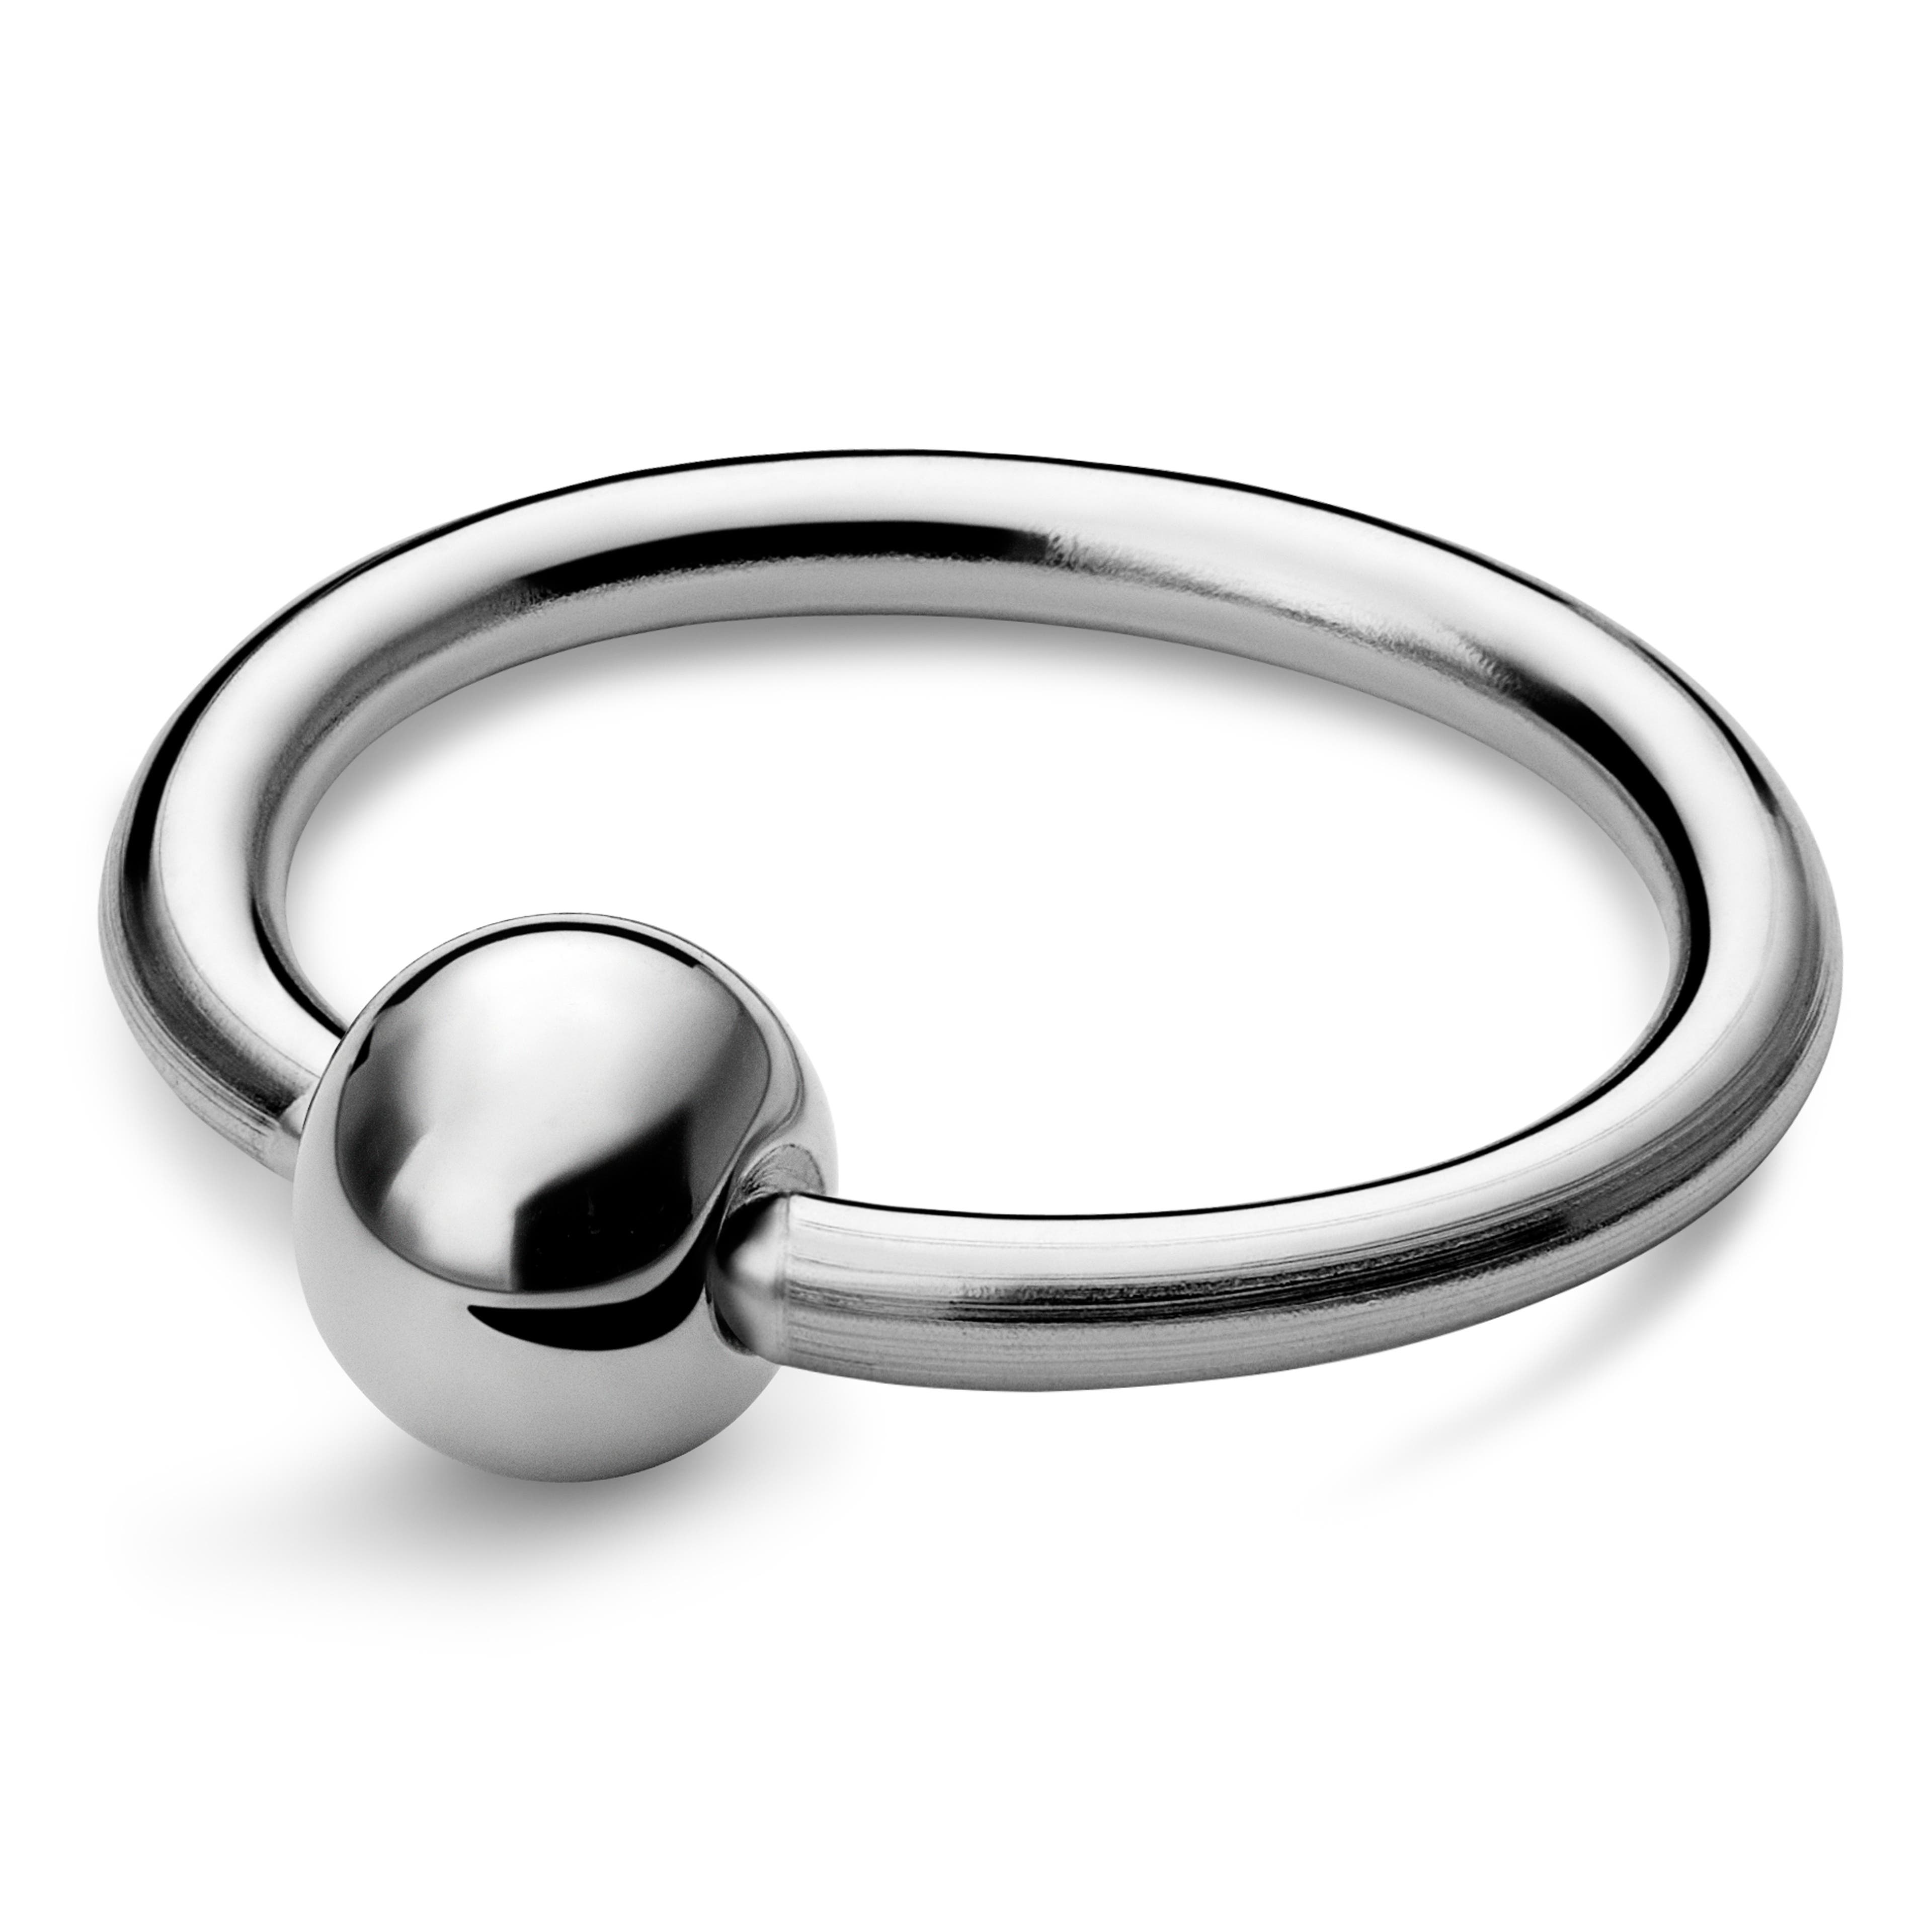 Captive bead ring da 12 mm in titanio color argento